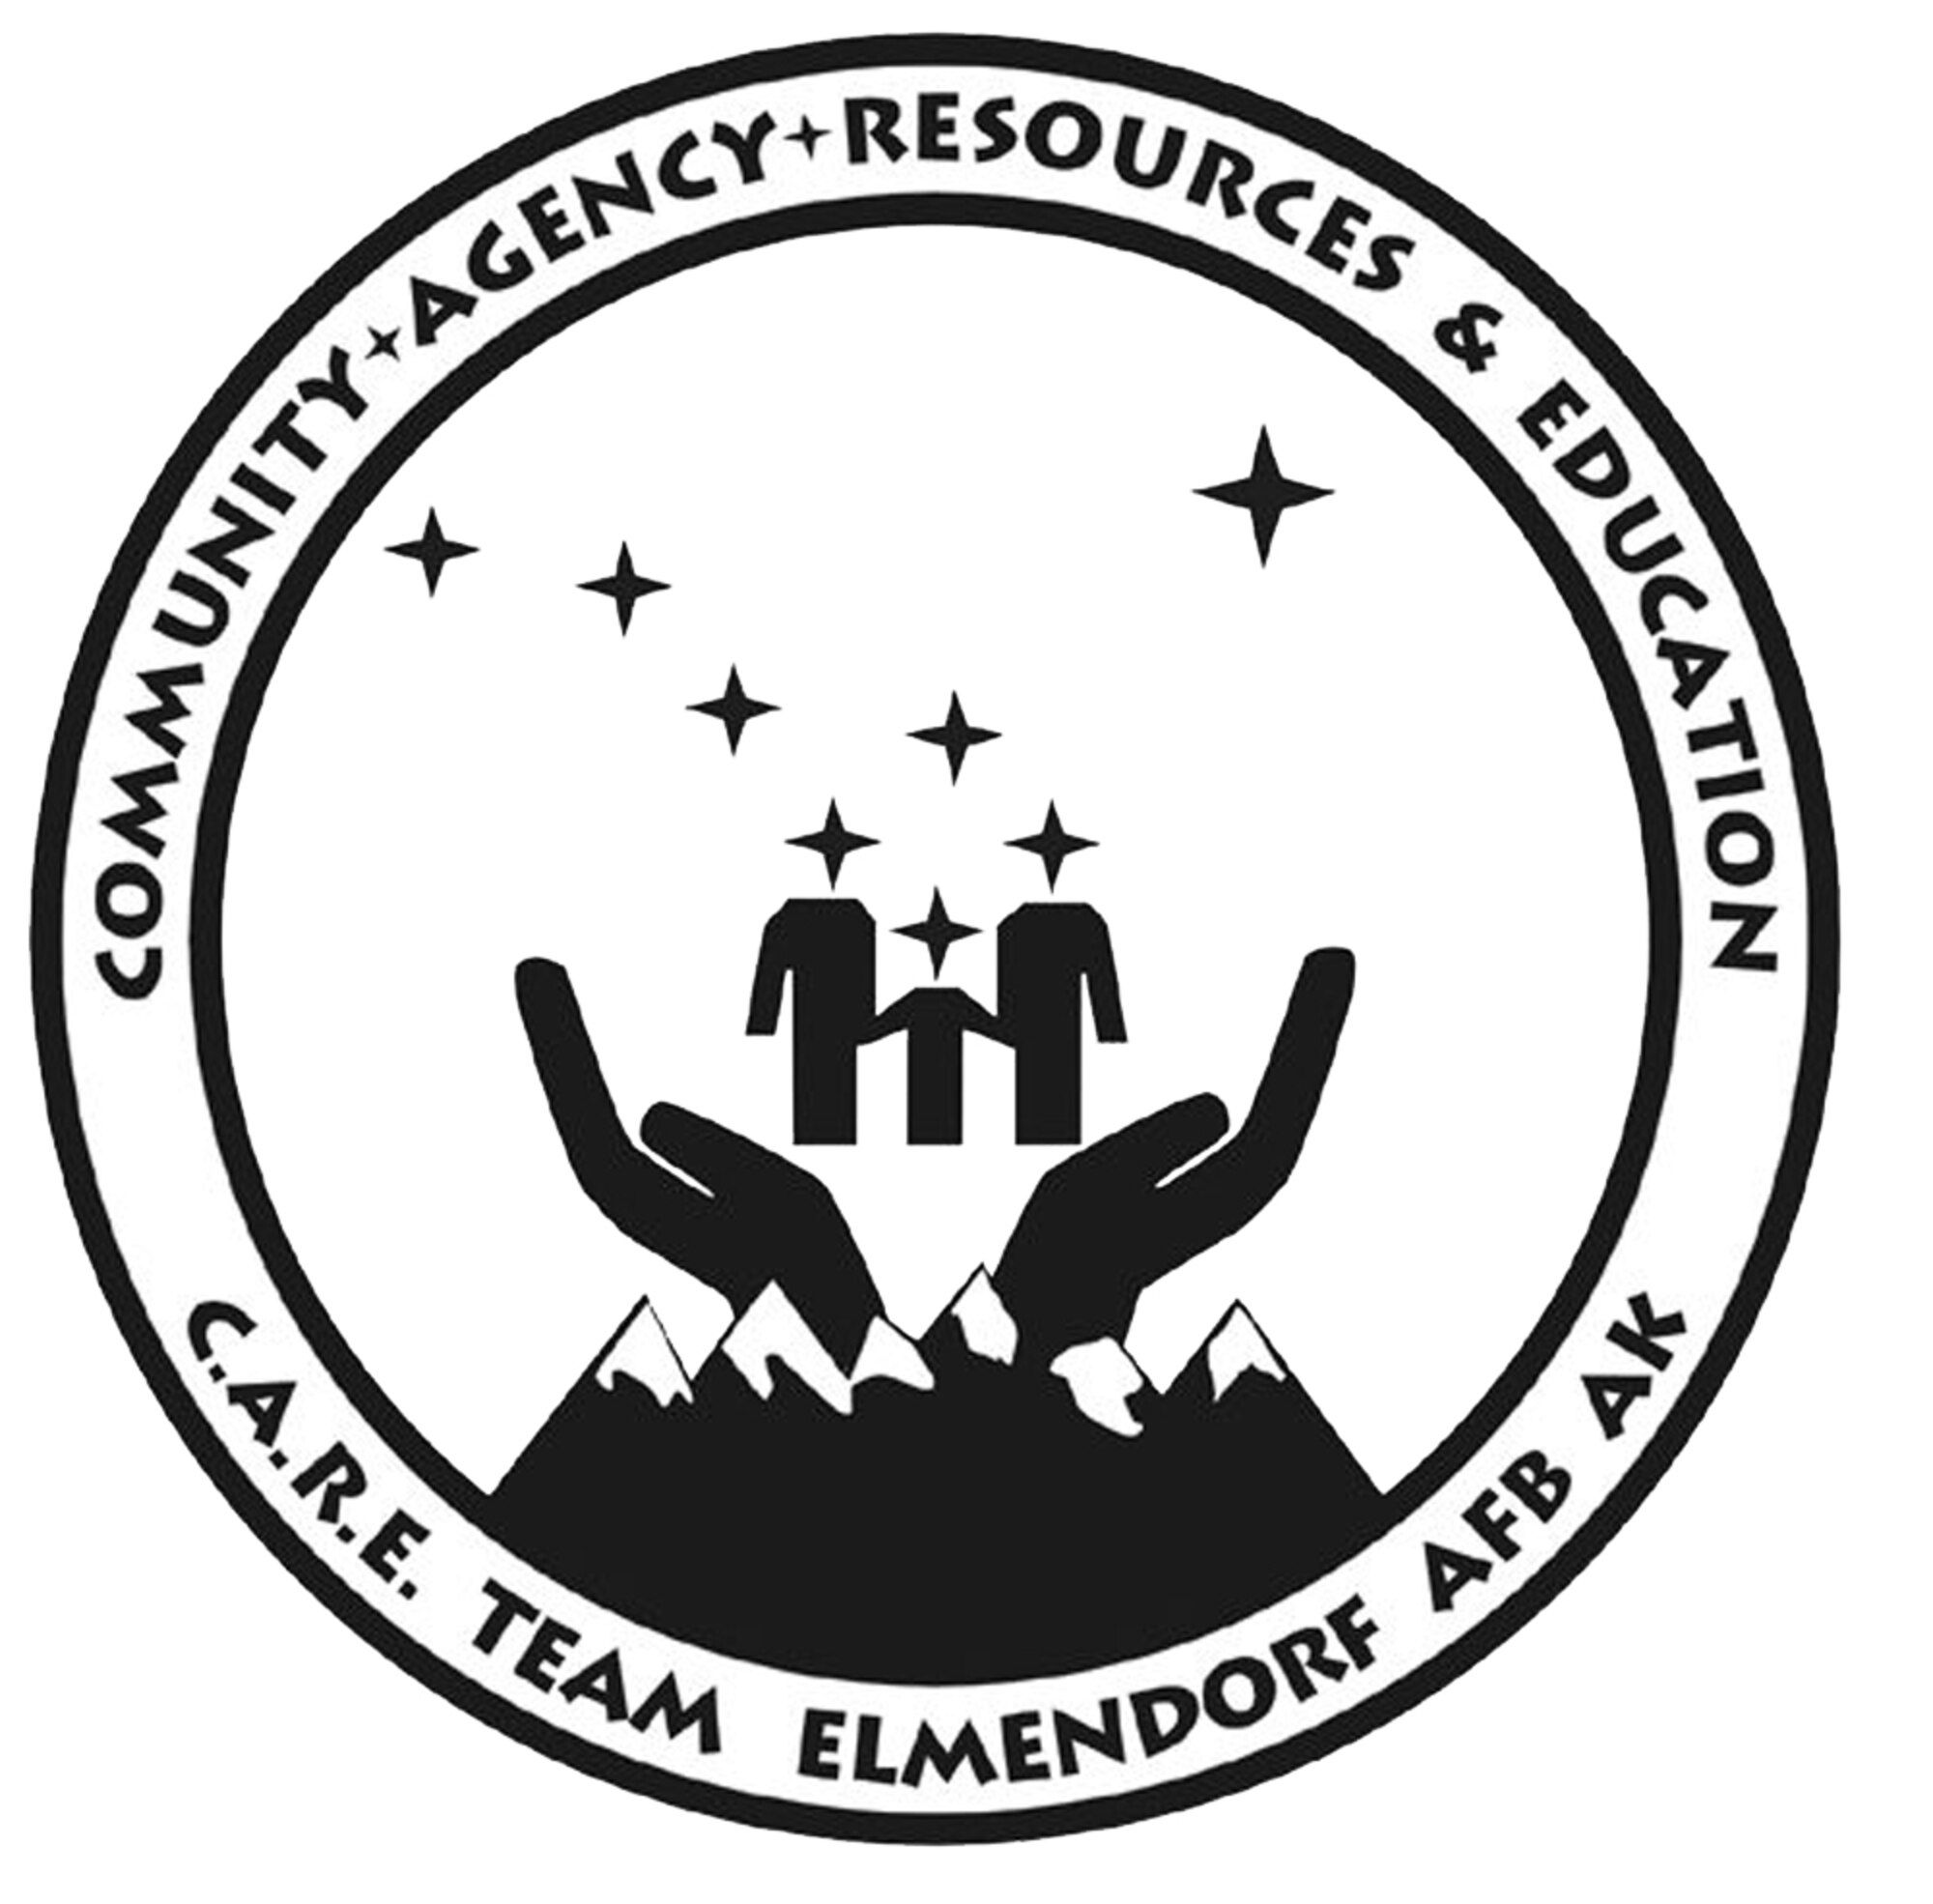 Community Agencies Resources and Education team of Elmendorf (U.S. Air Force graphic)